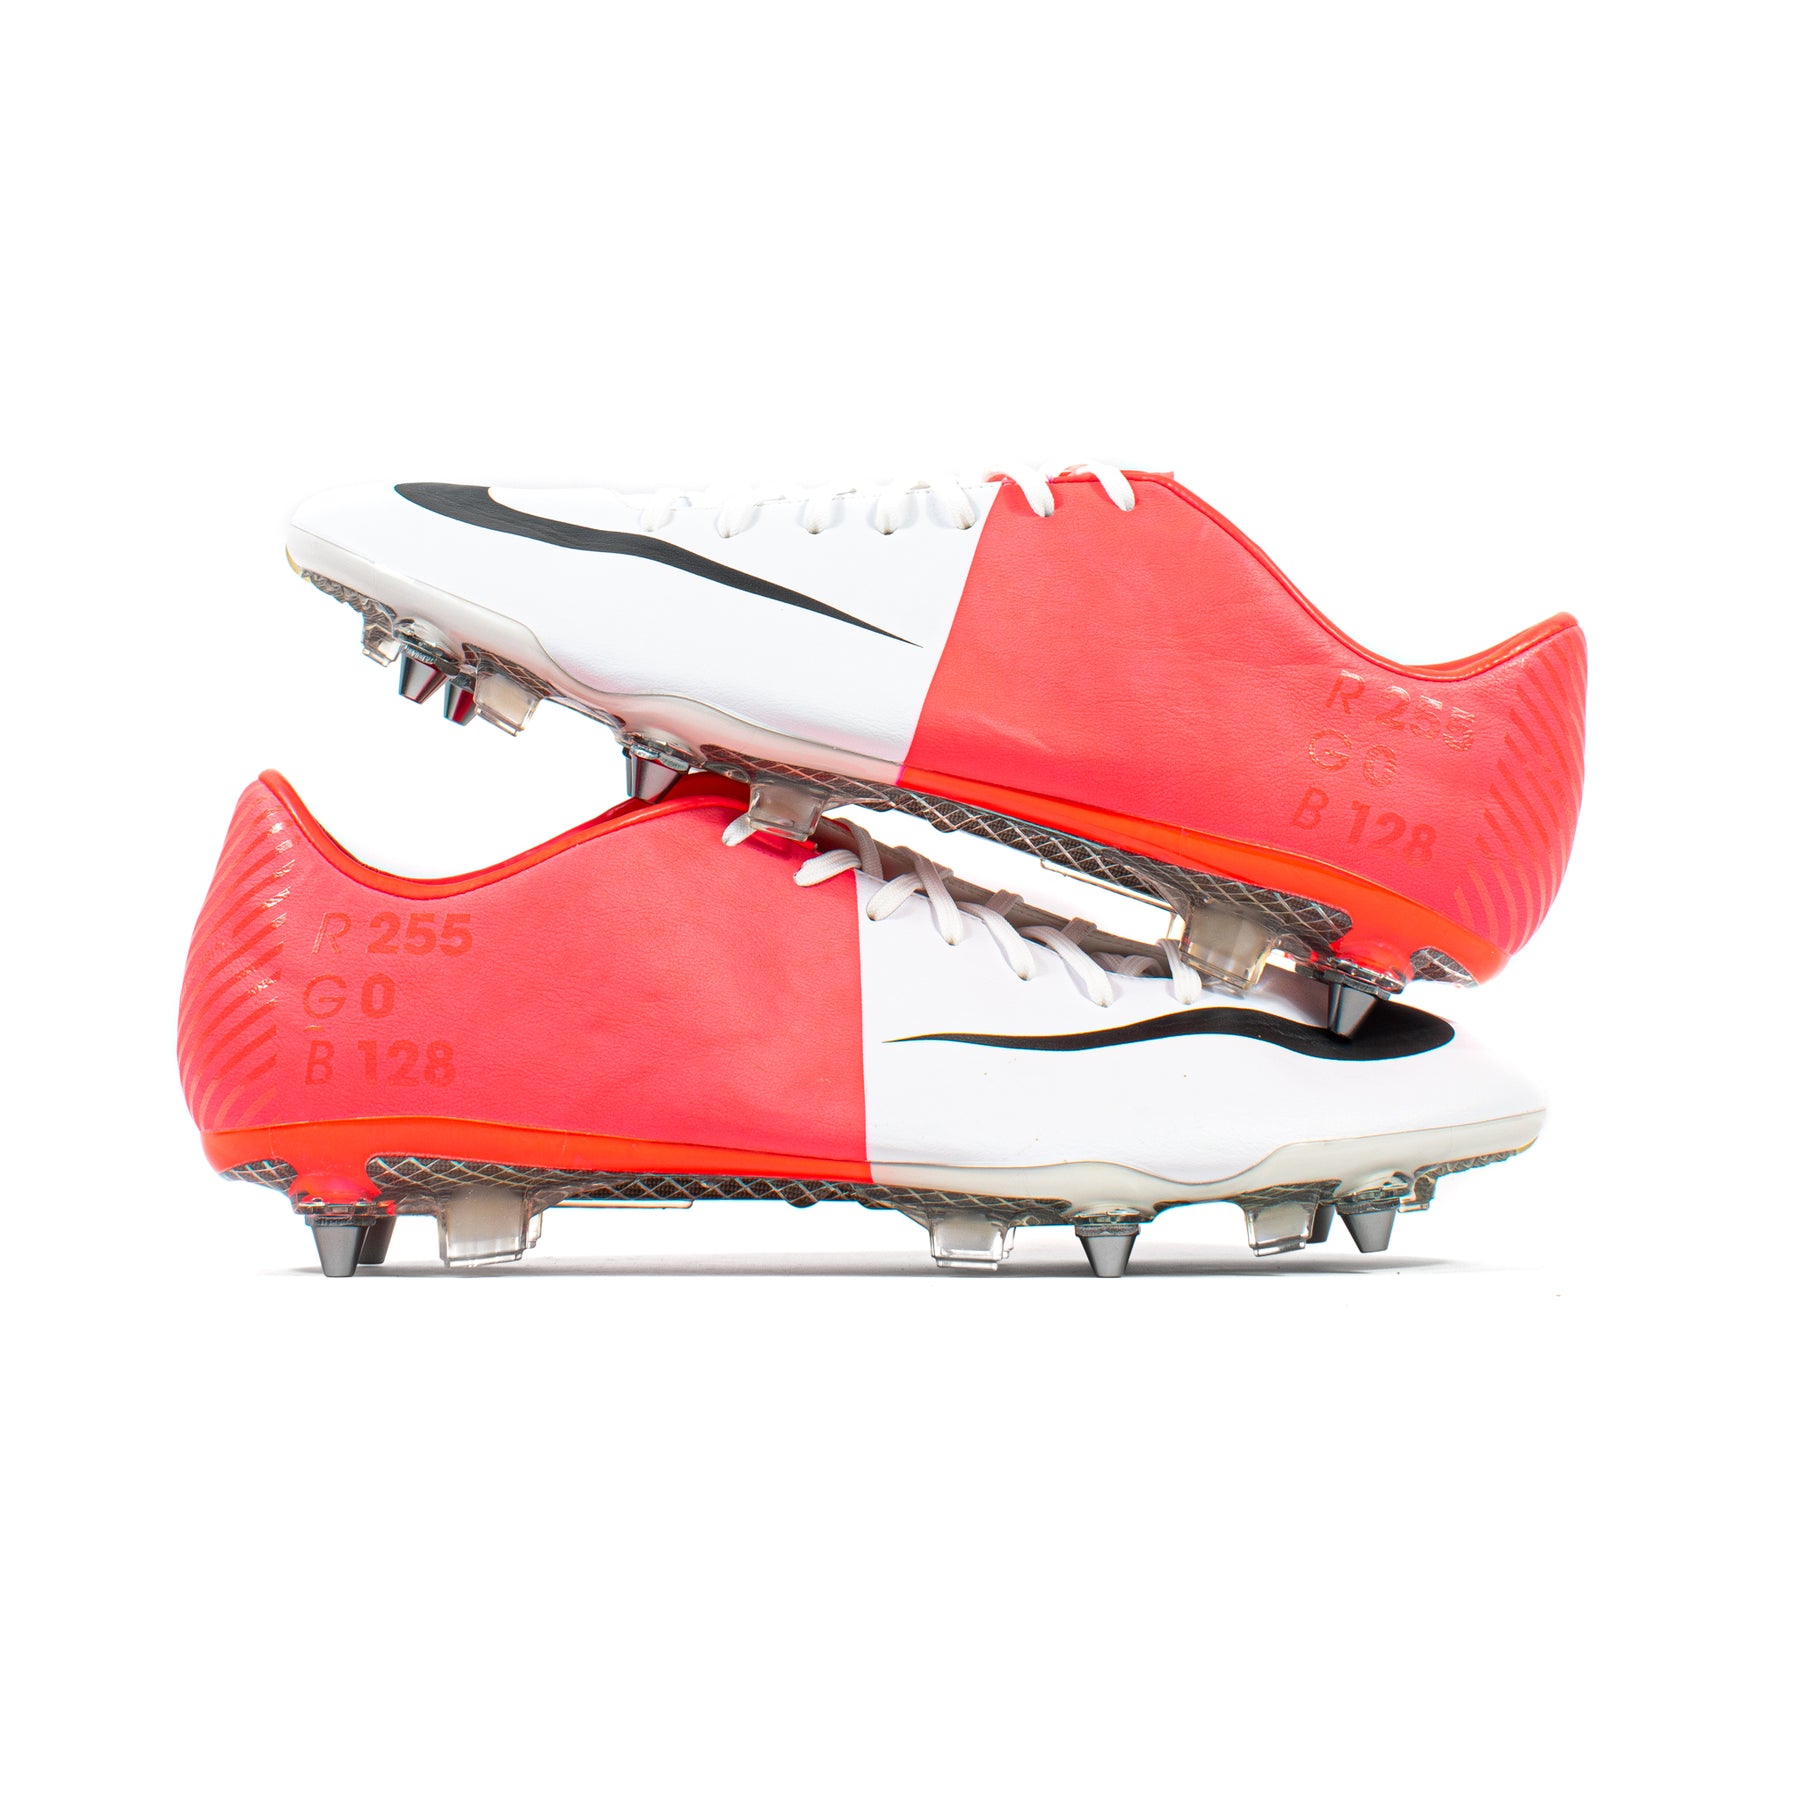 Onheil Kinematica Poort Nike Mercurial Vapor VIII Euro Clash 2012 SG Pro – Classic Soccer Cleats